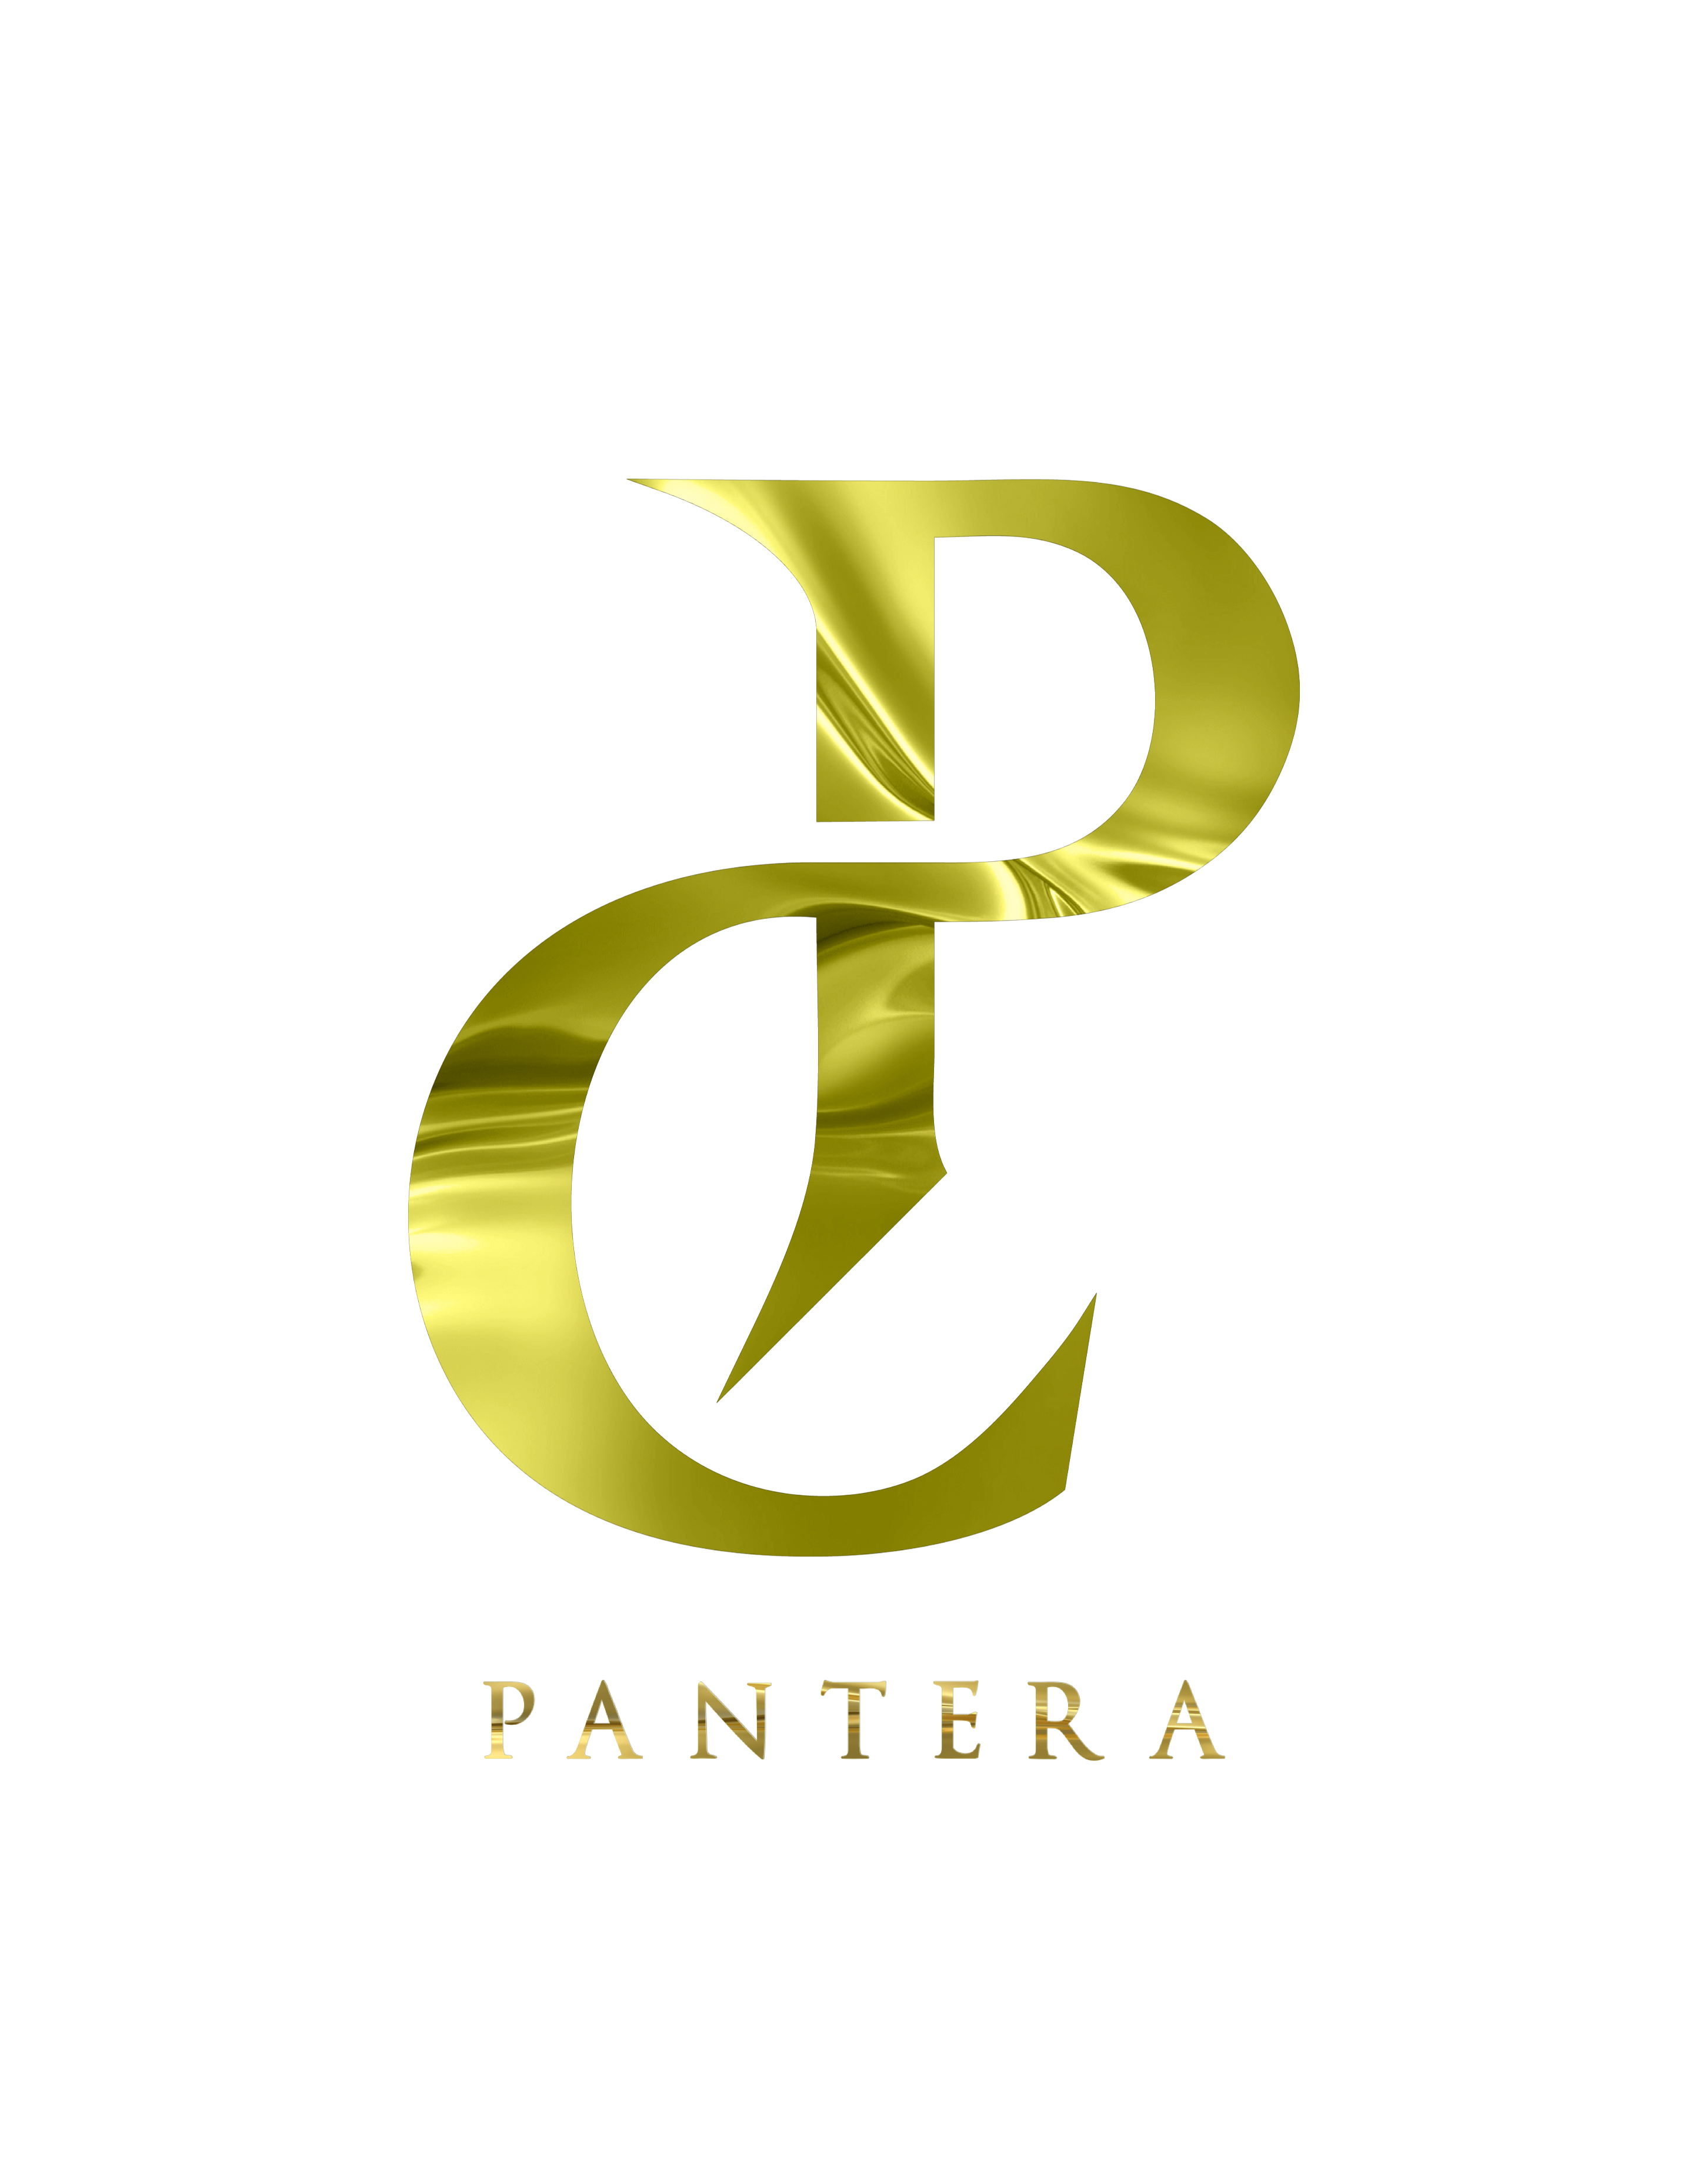 Pantera Event Productions